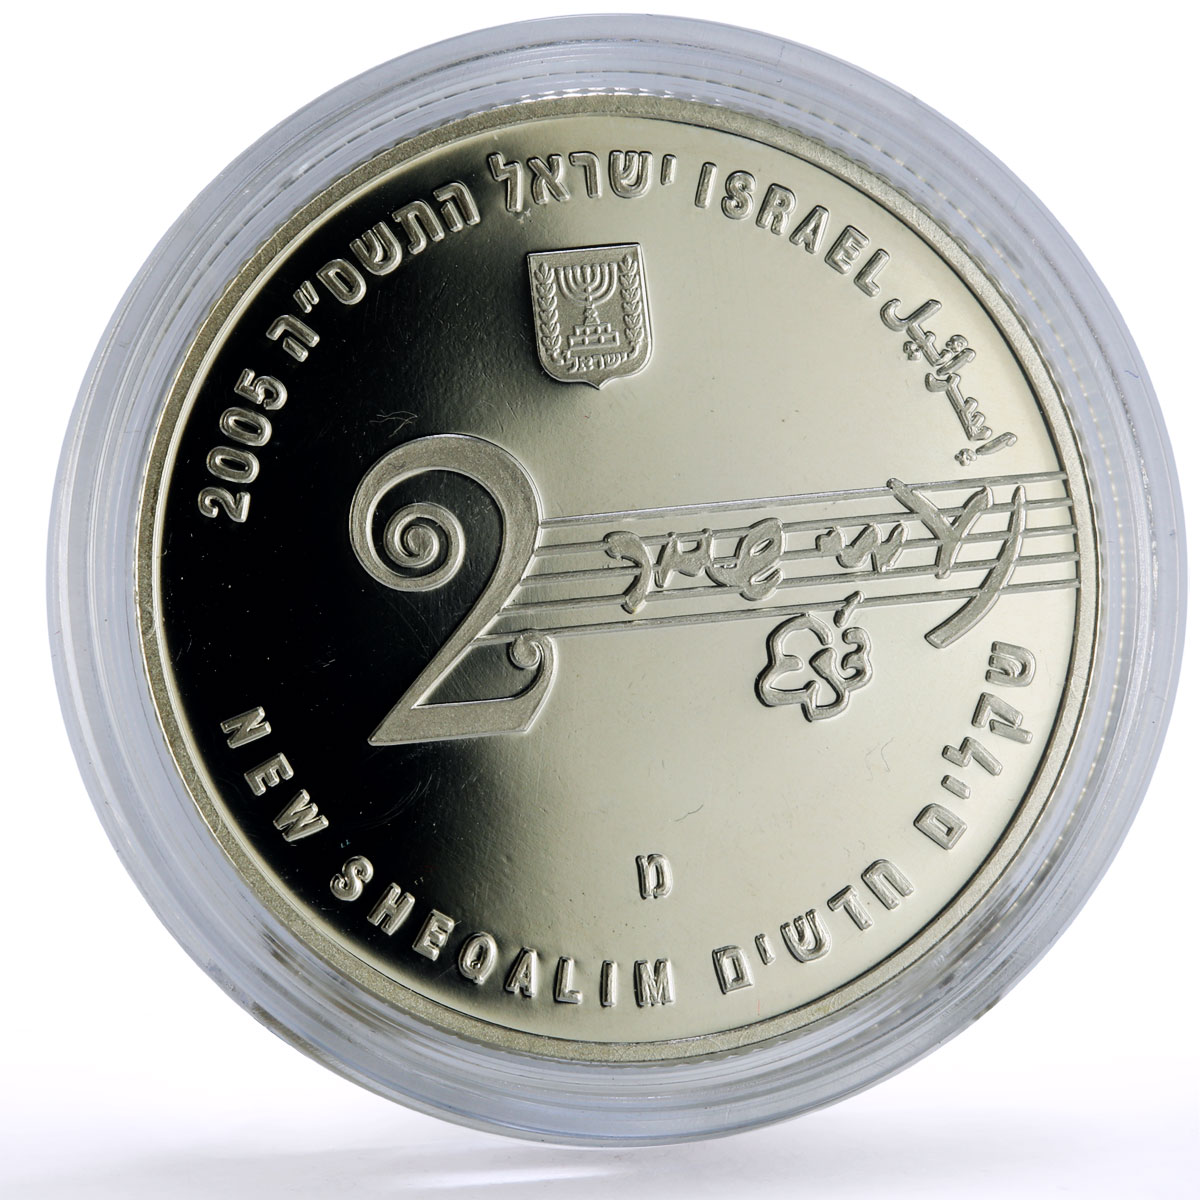 Israel 2 sheqalim Singer Naomi Shemer Music proof silver coin 2005